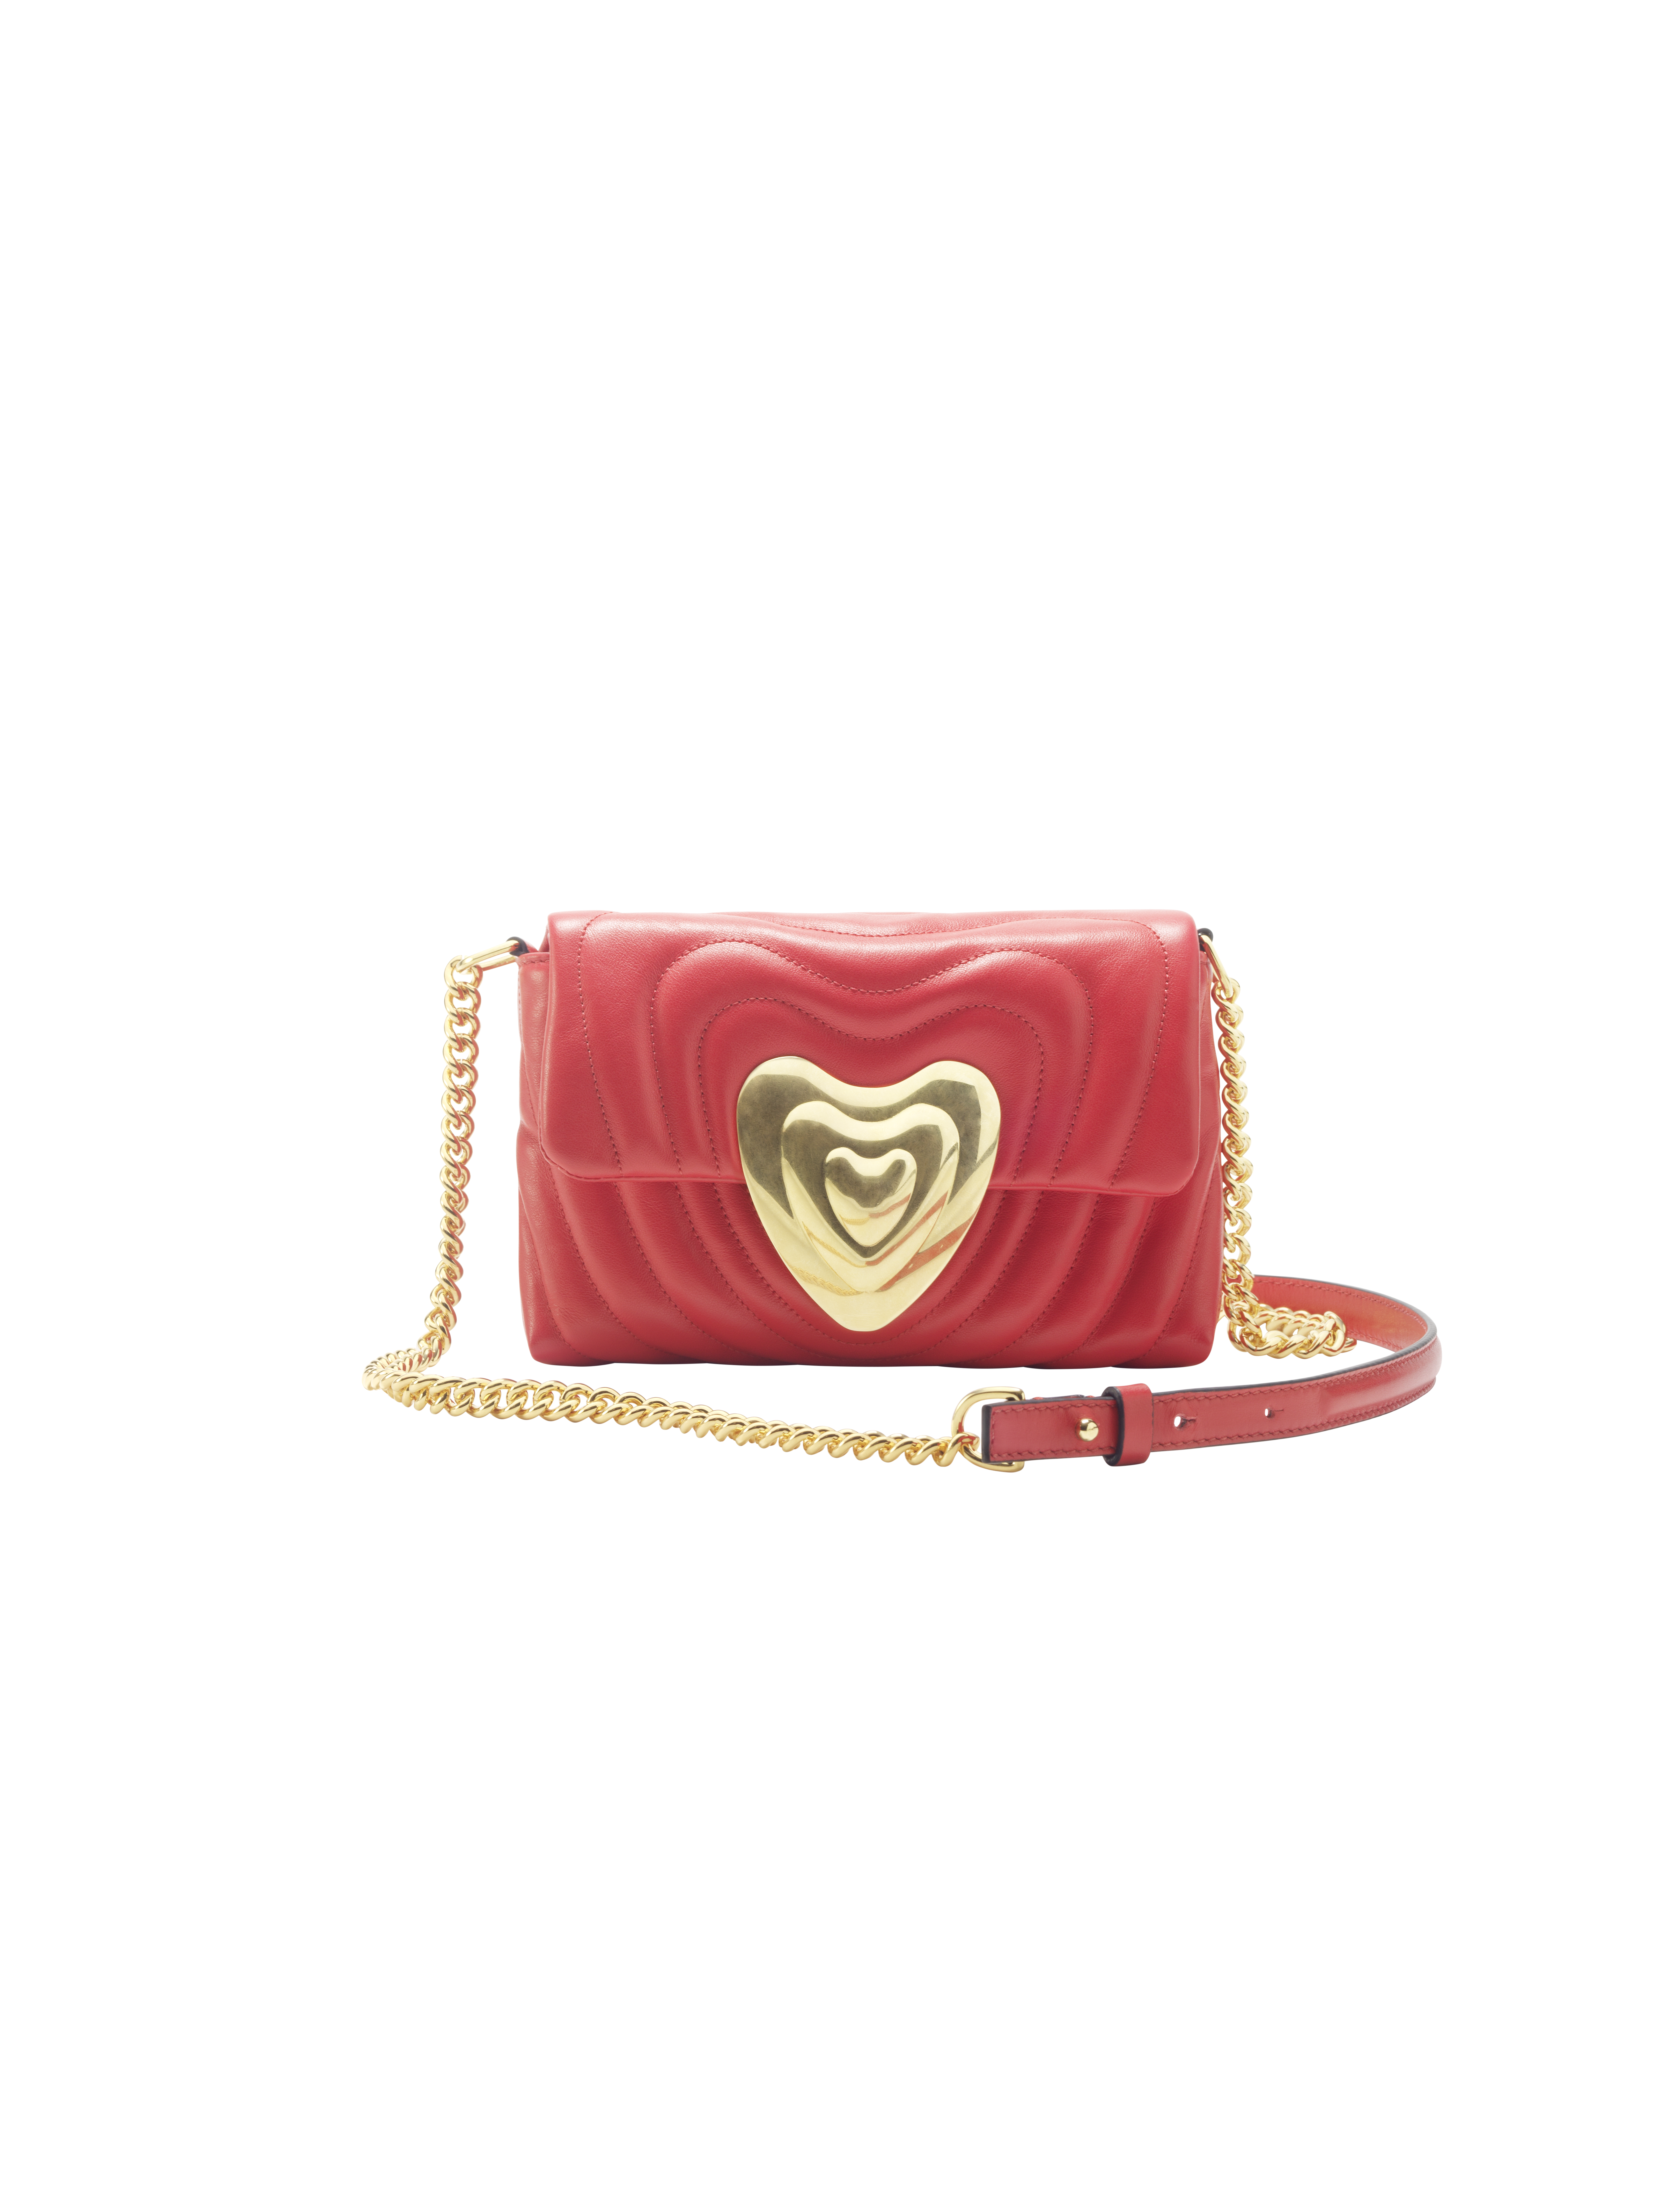 ‘The Heart’ bag by ESCADA in support of Women for Women International.